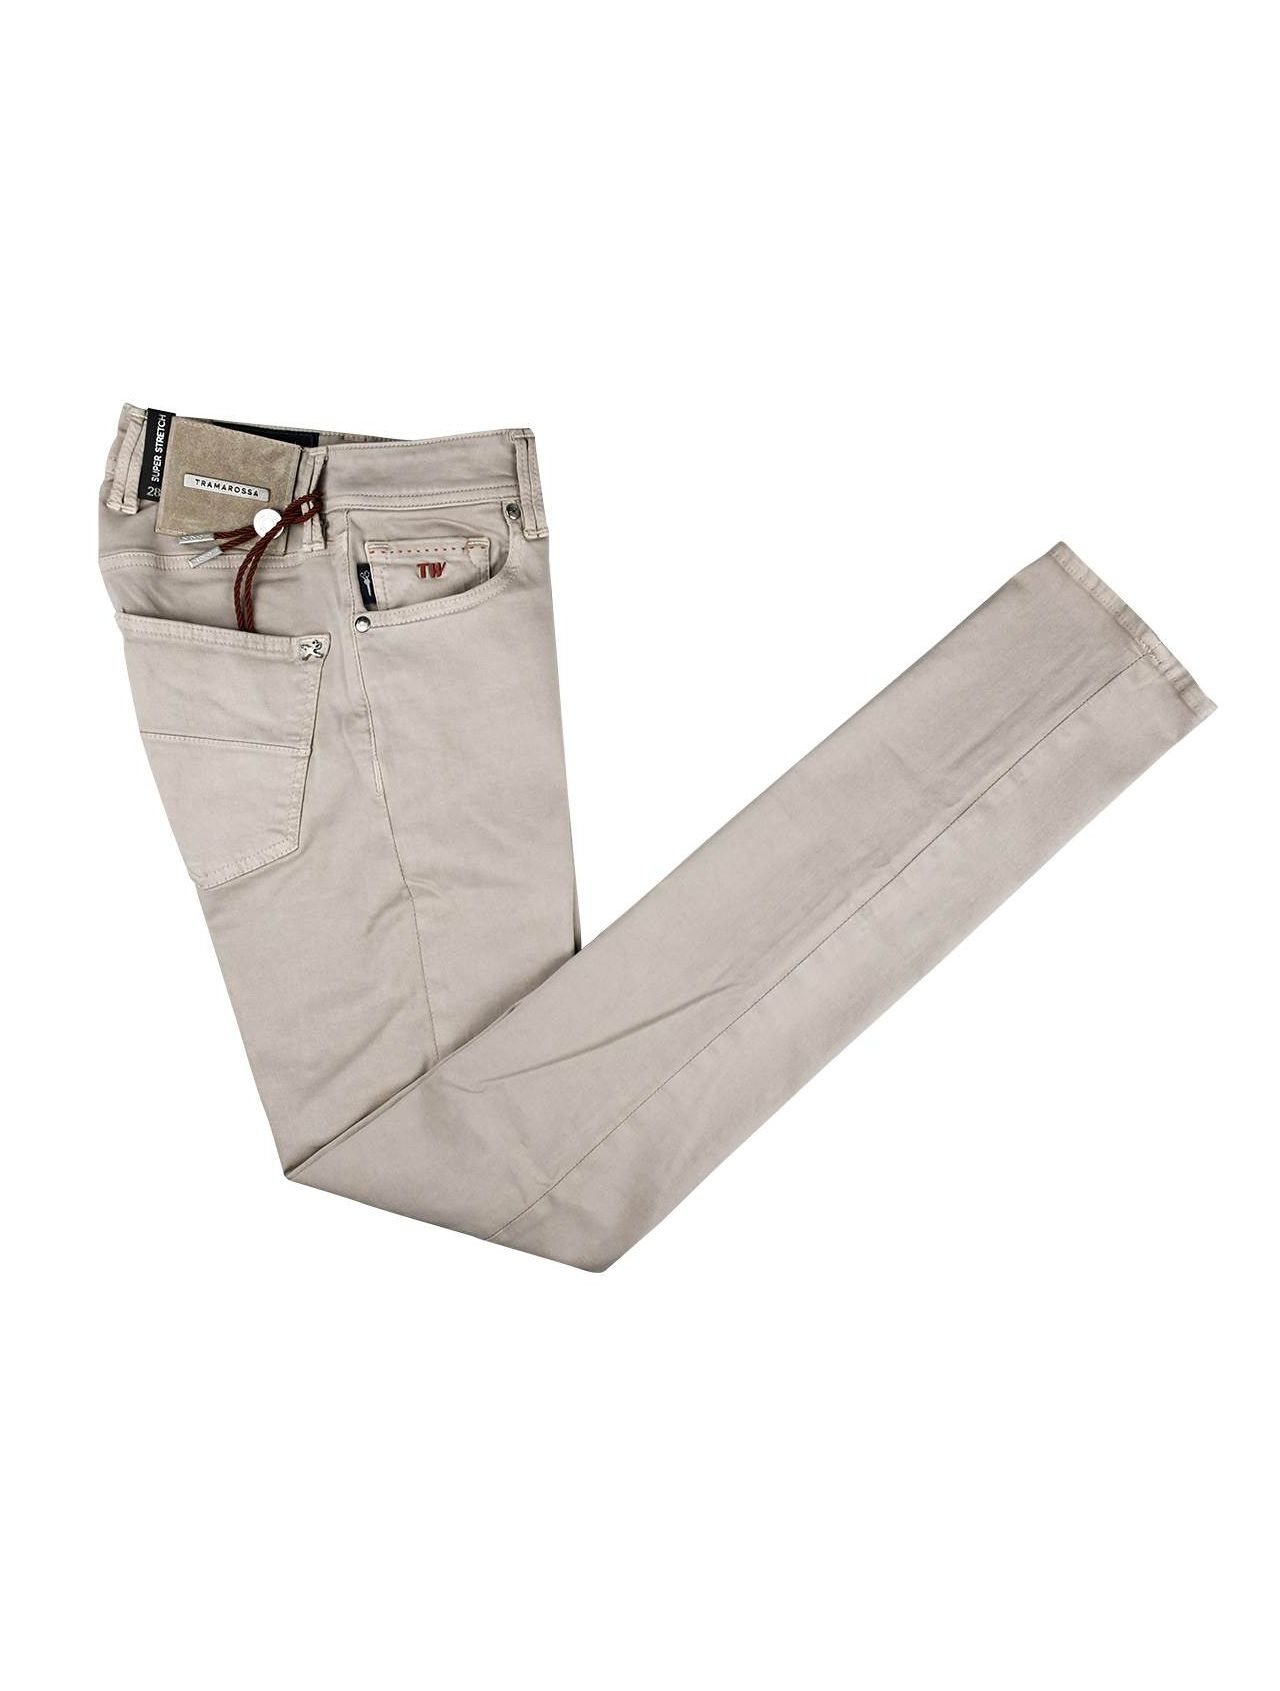 TRAMAROSSA Colour Leonardo Khaki Cotton Stretch Slim Fit Jeans Pants S